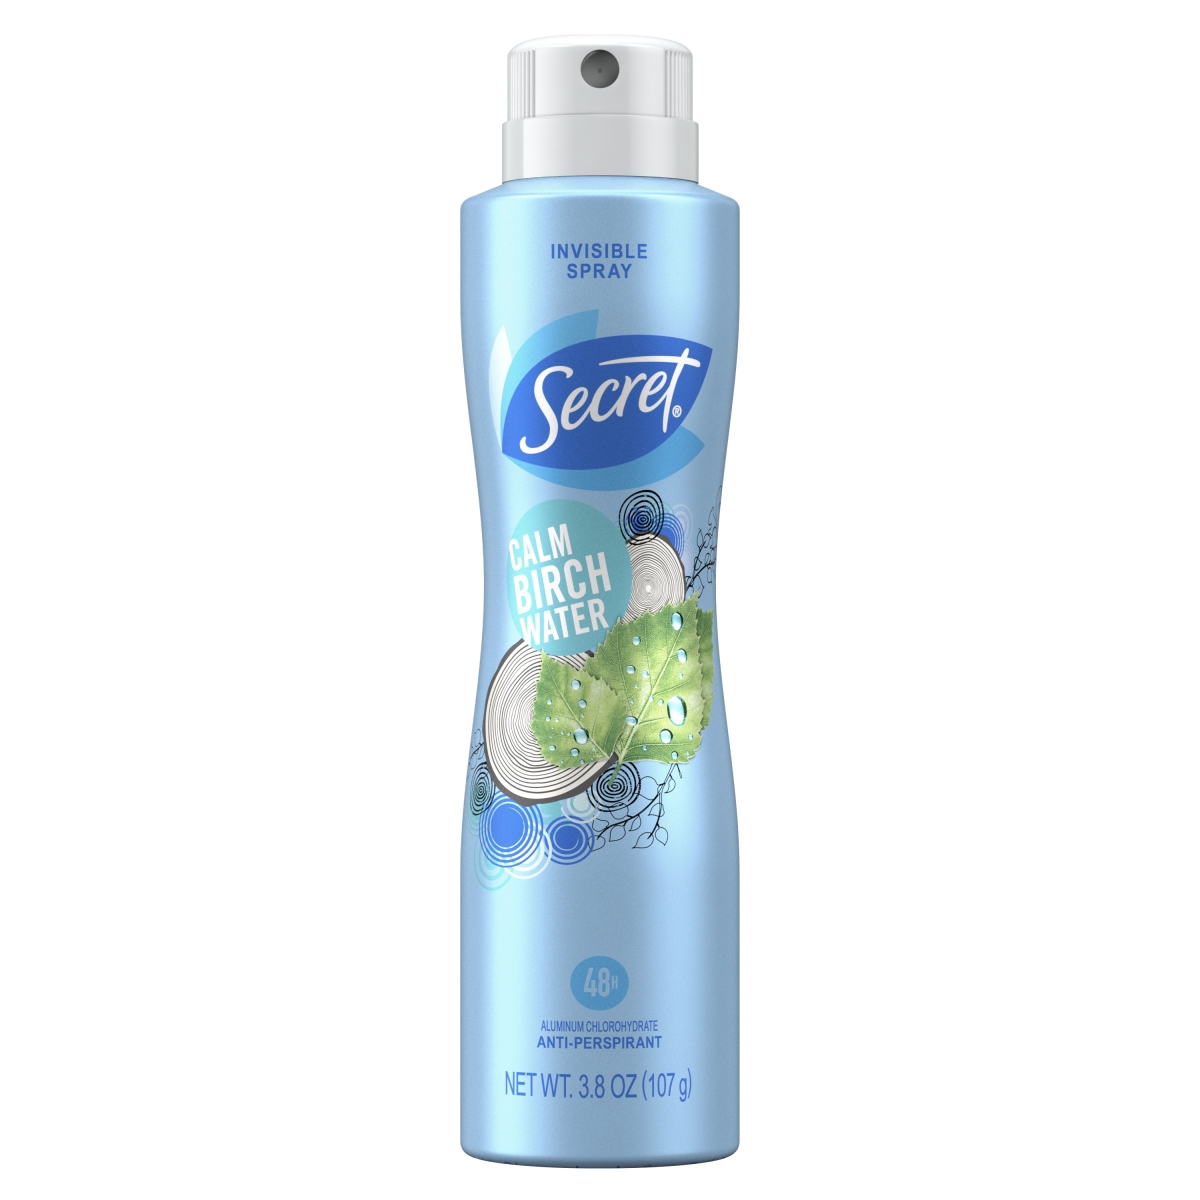 0565121 Secret Invisible Spray Antiperspirant & Deodorant For Women, Calm Birch Water